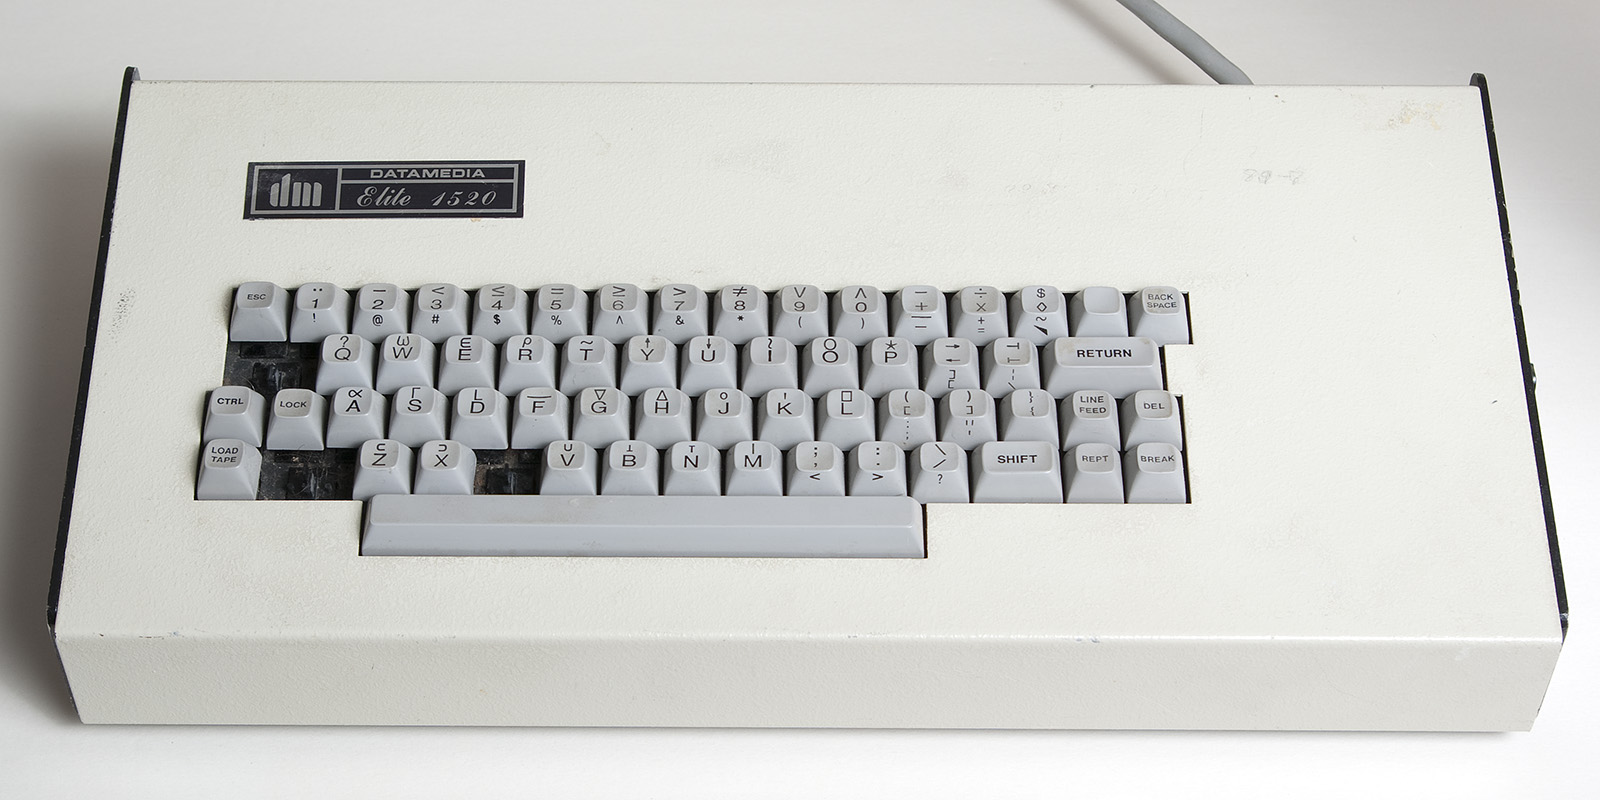 Datamedia 1520 APL keyboard